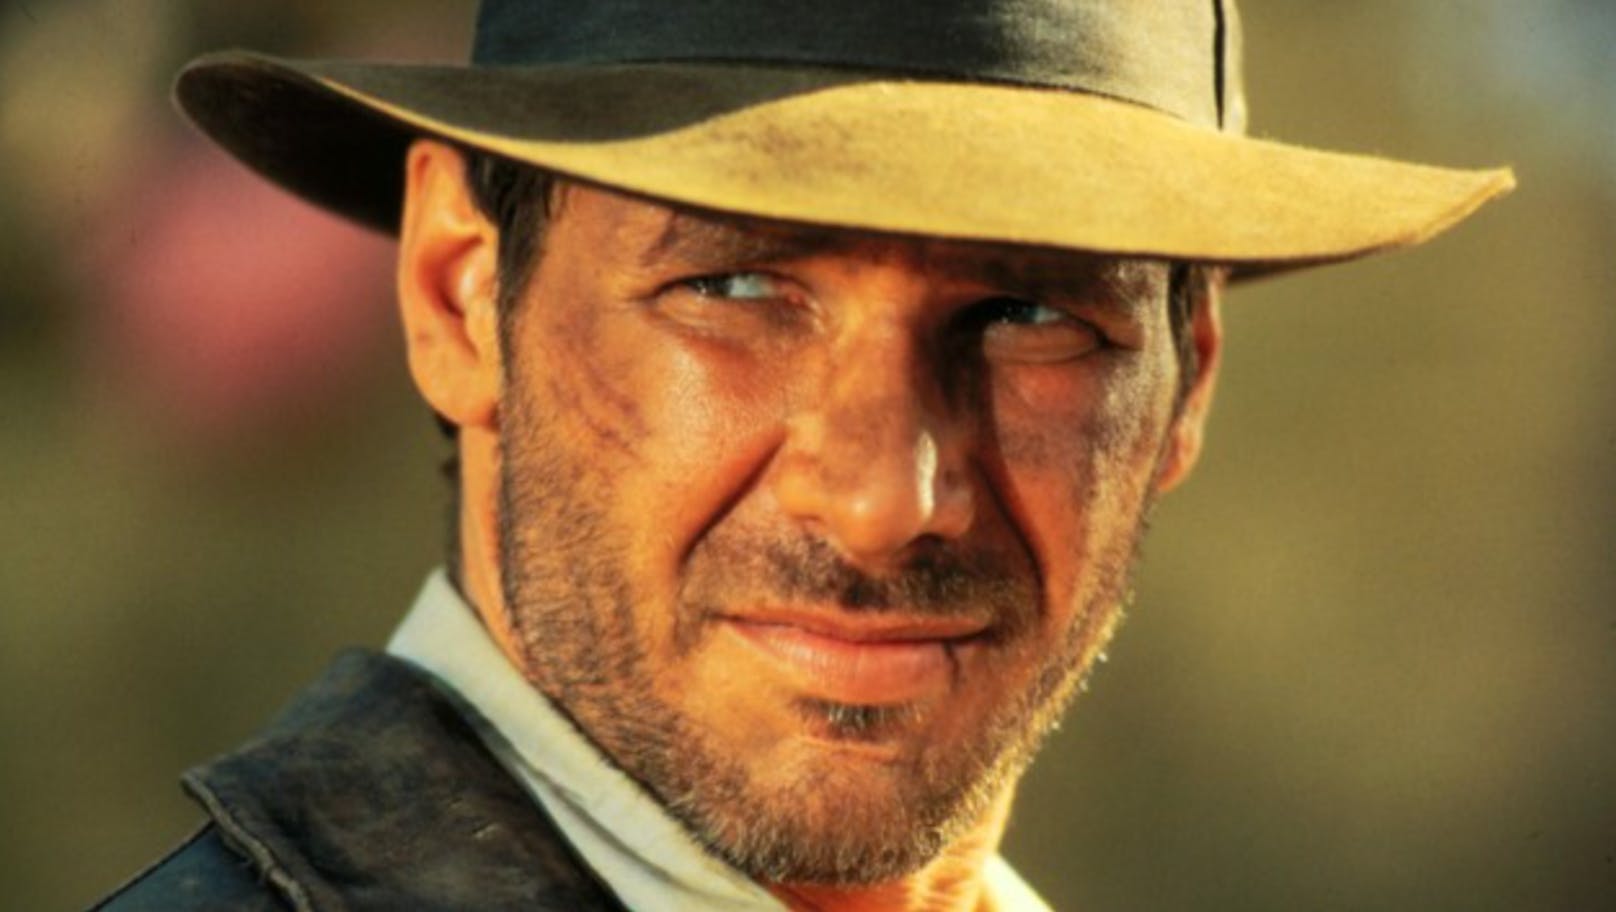 Wieder Toter bei Dreh! Diesmal bei "Indiana Jones 5"